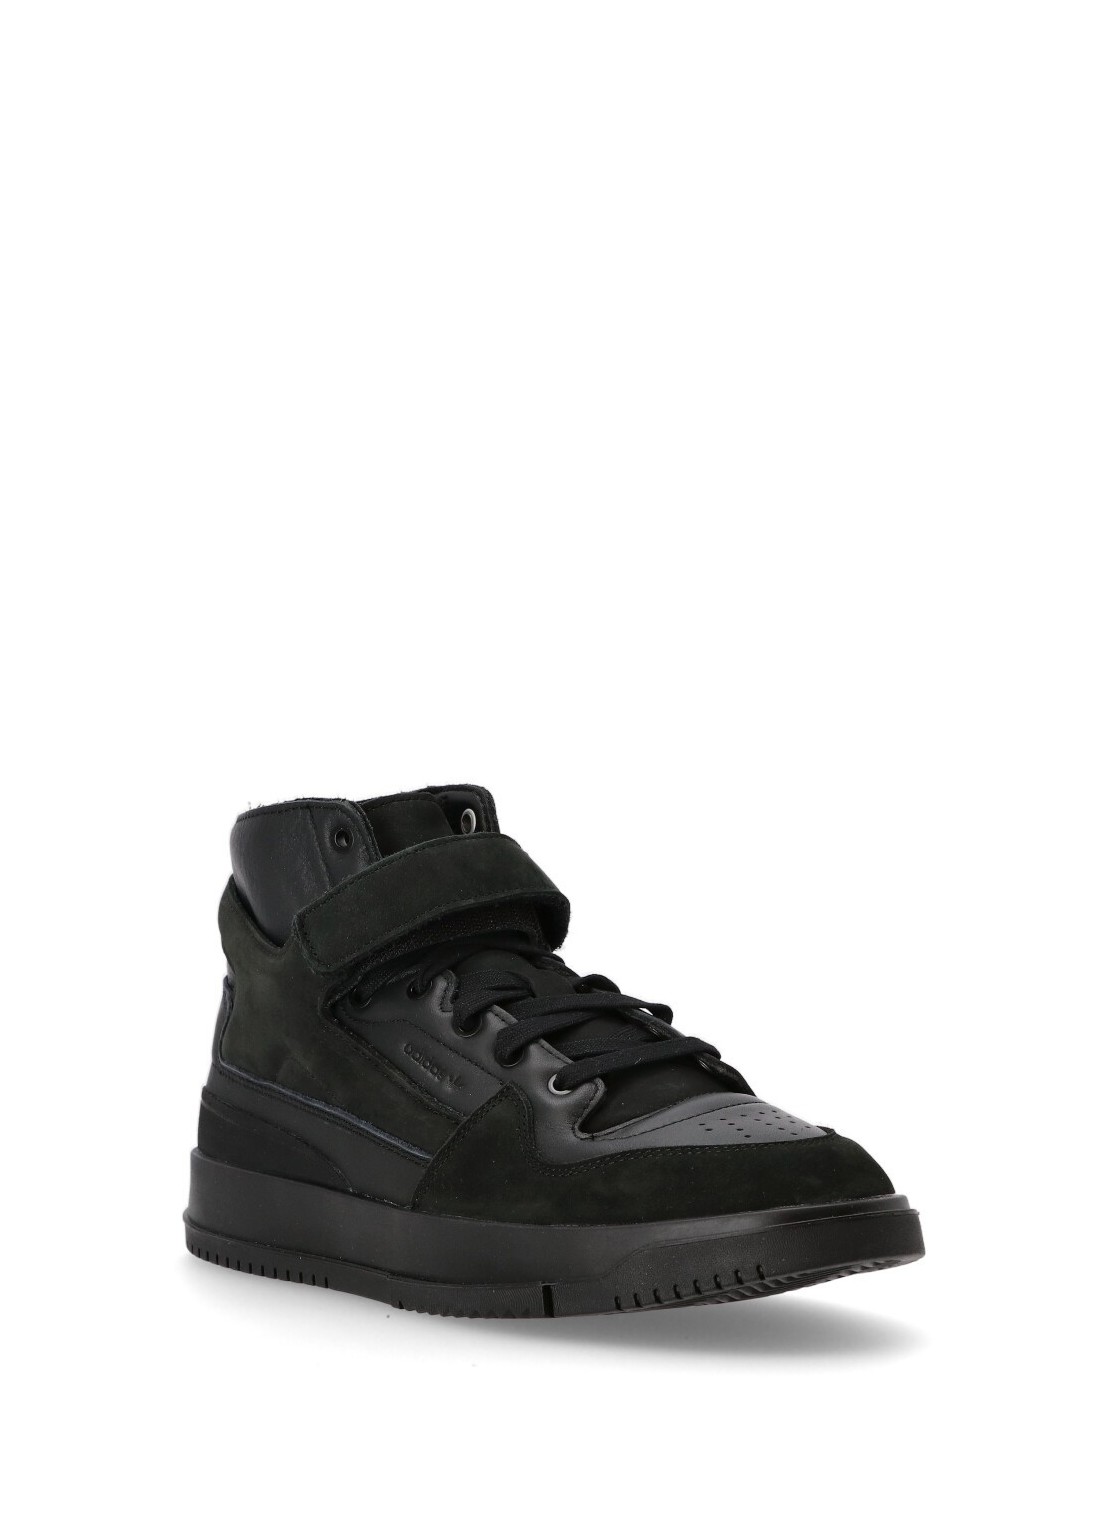 adidas sneaker man forum premiere gy5799 cblack cblack cwhite Talla 41 ...